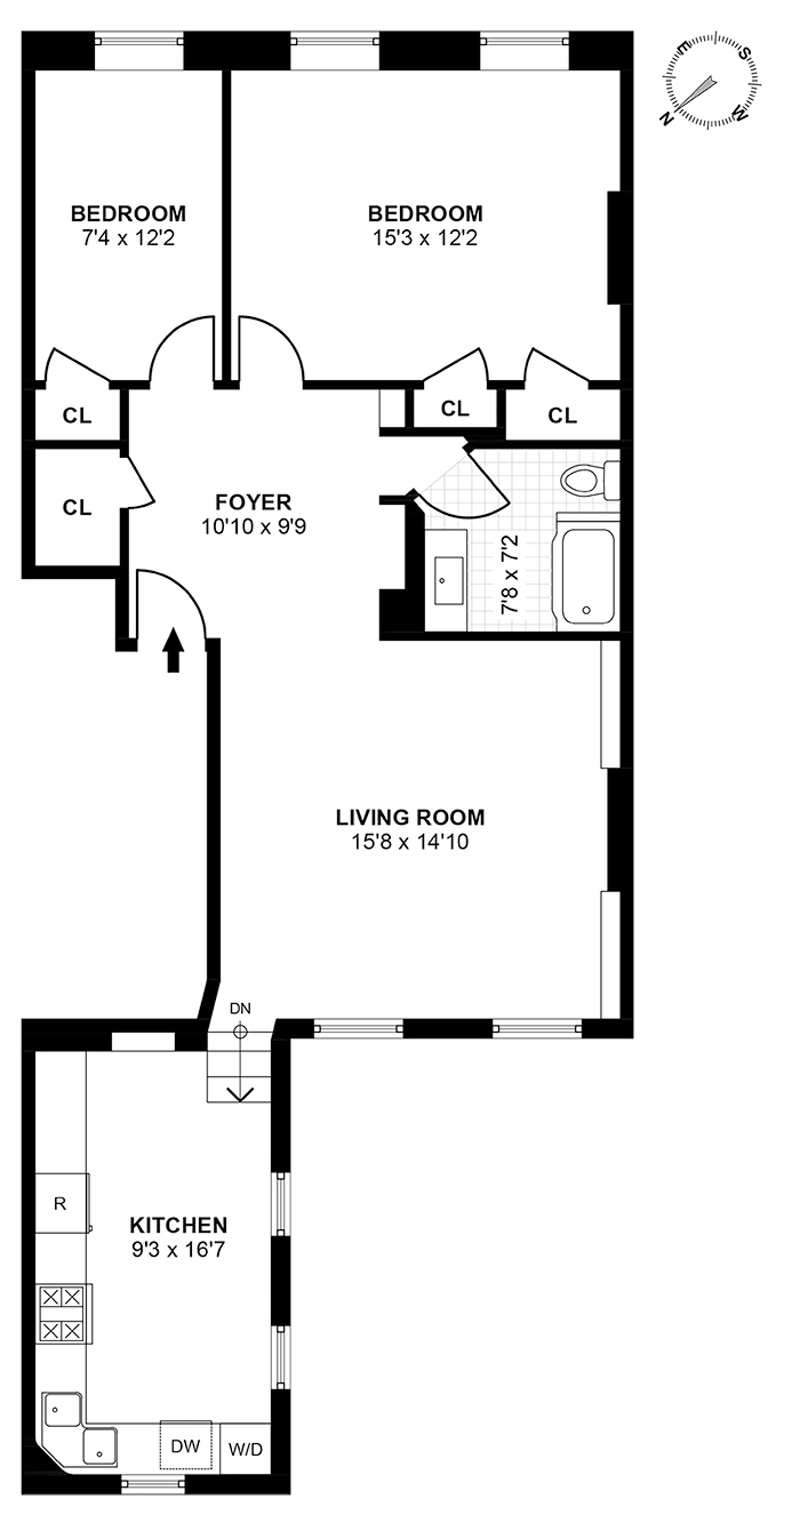 Floorplan for 106 Willow Street